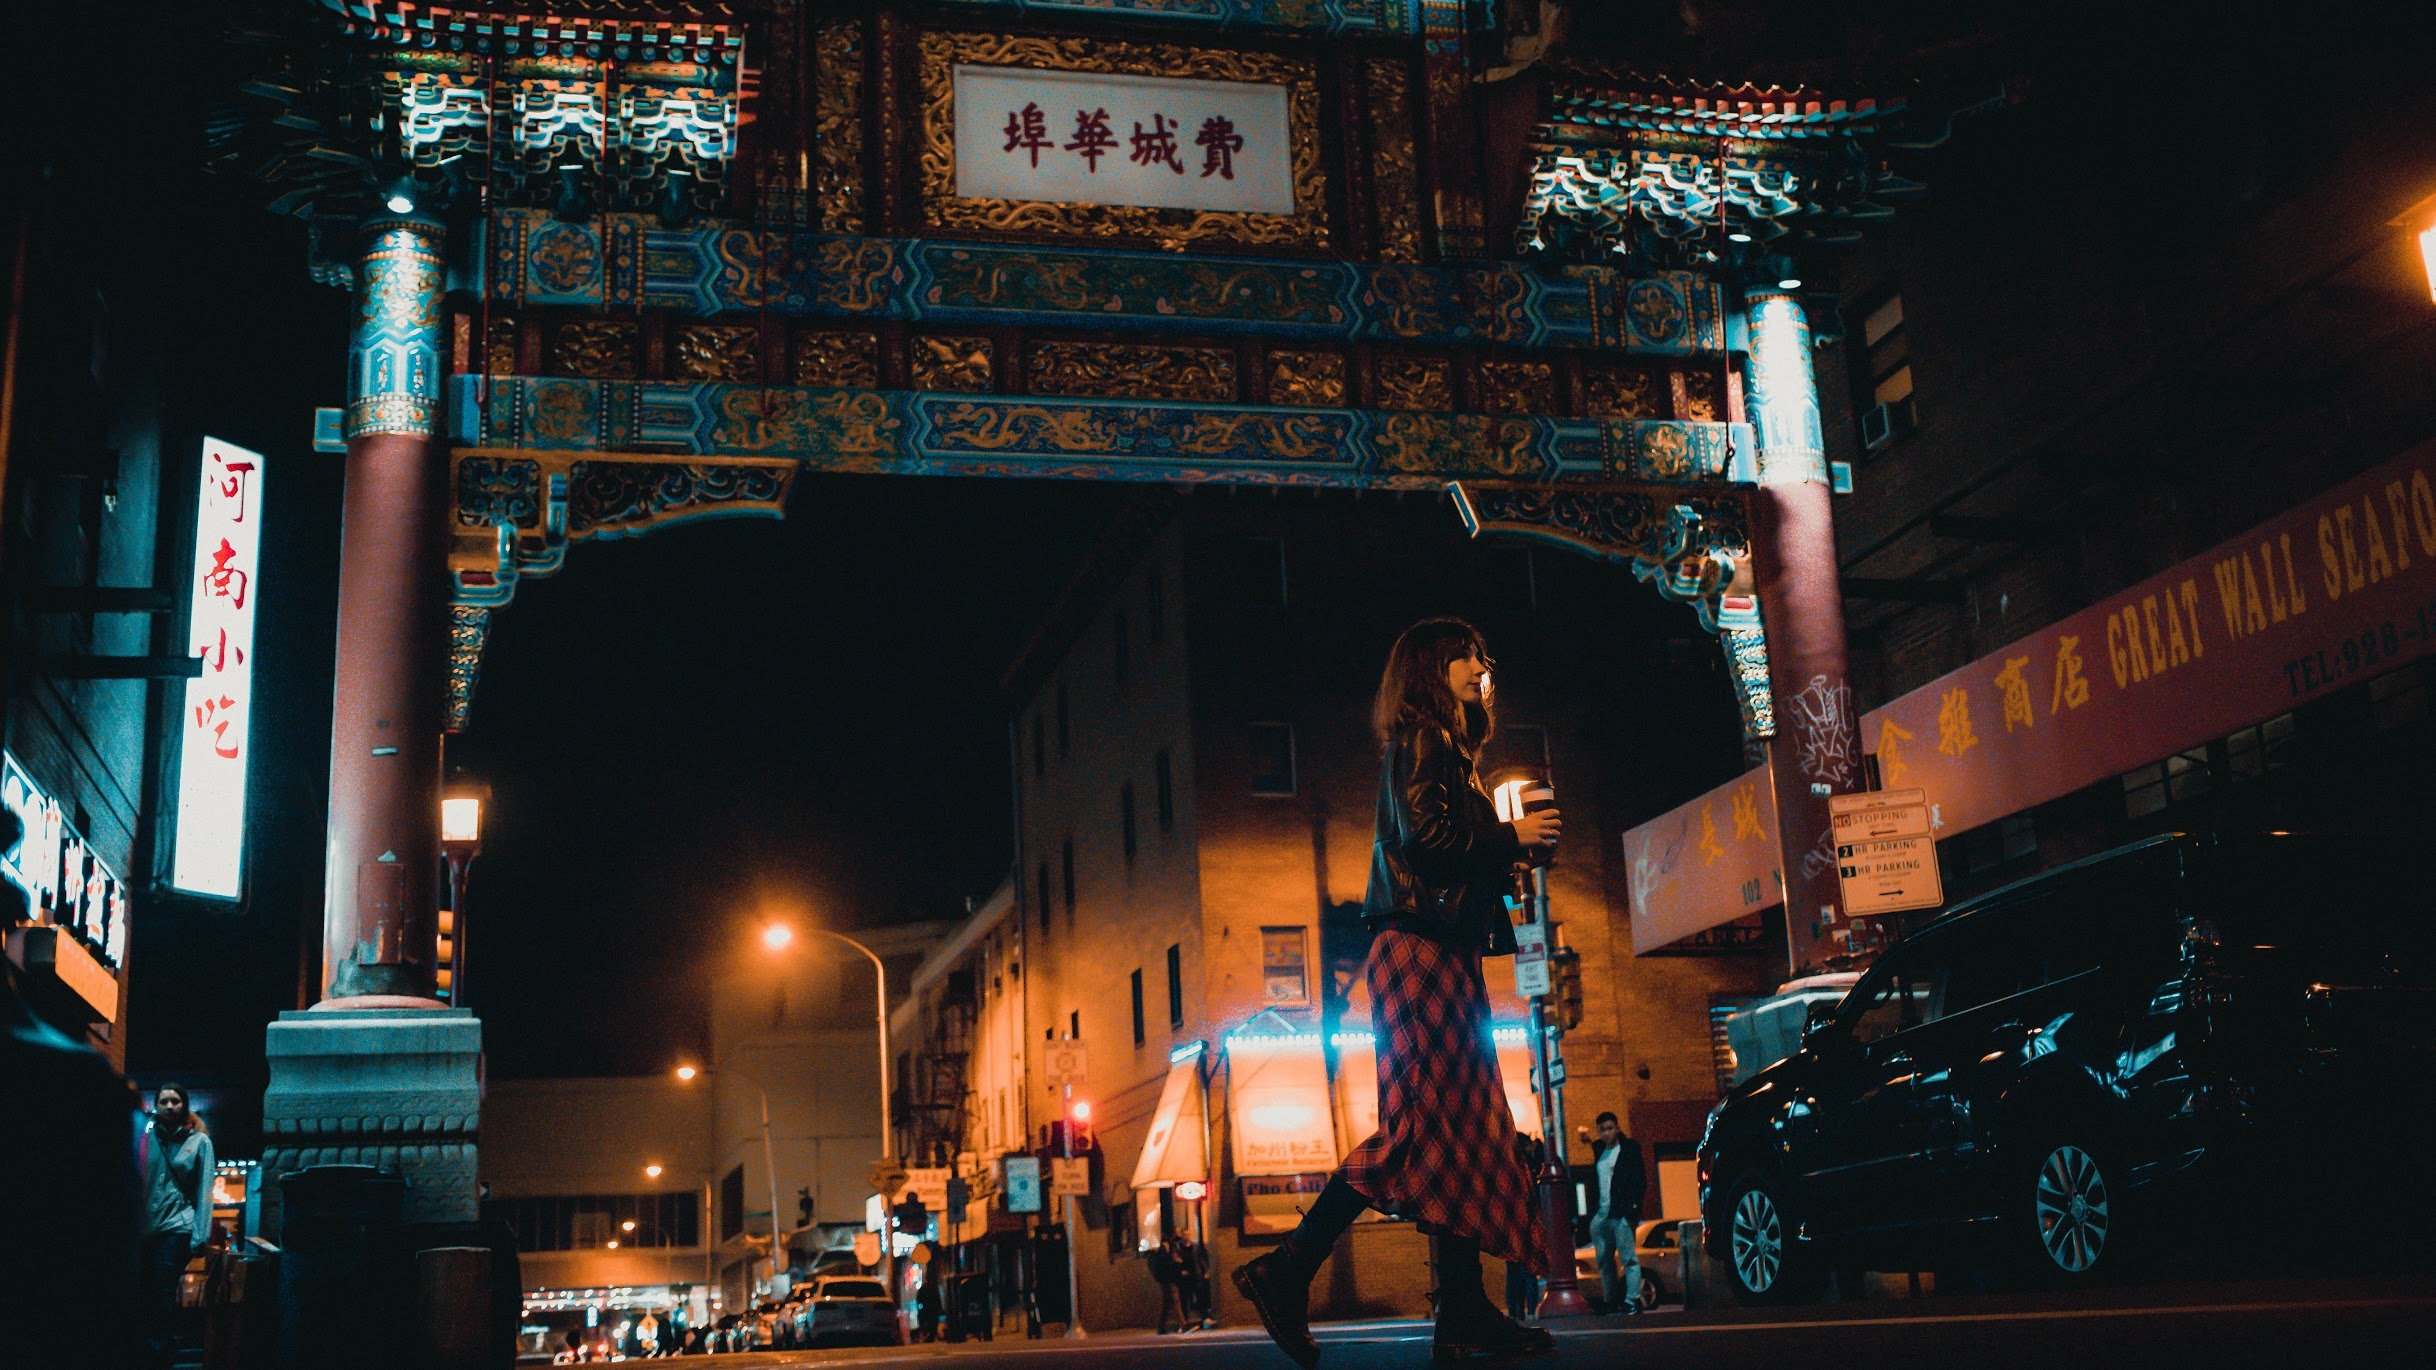 Chinatown Arch Maggie Donoghue Walking with Bean2Bean Coffee in Philadelphia photo by Ryan Spillman